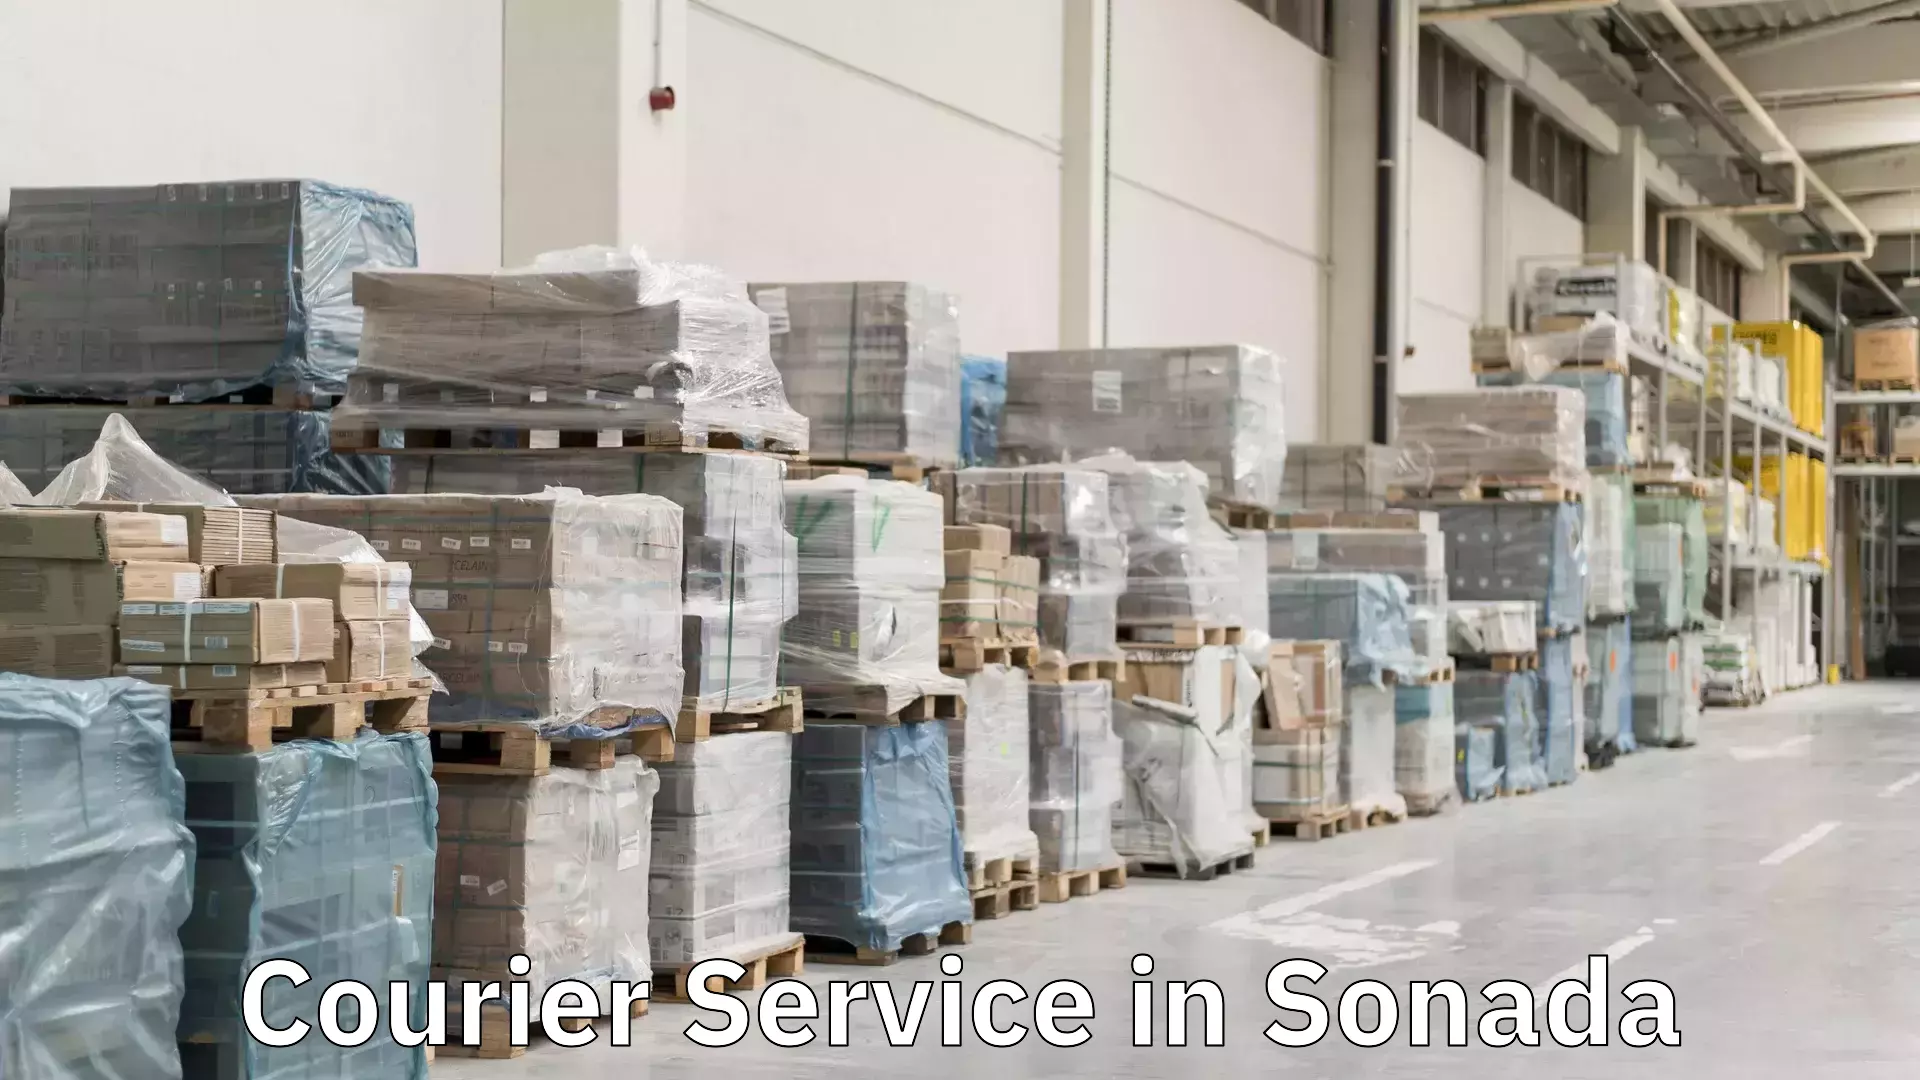 Lightweight parcel options in Sonada